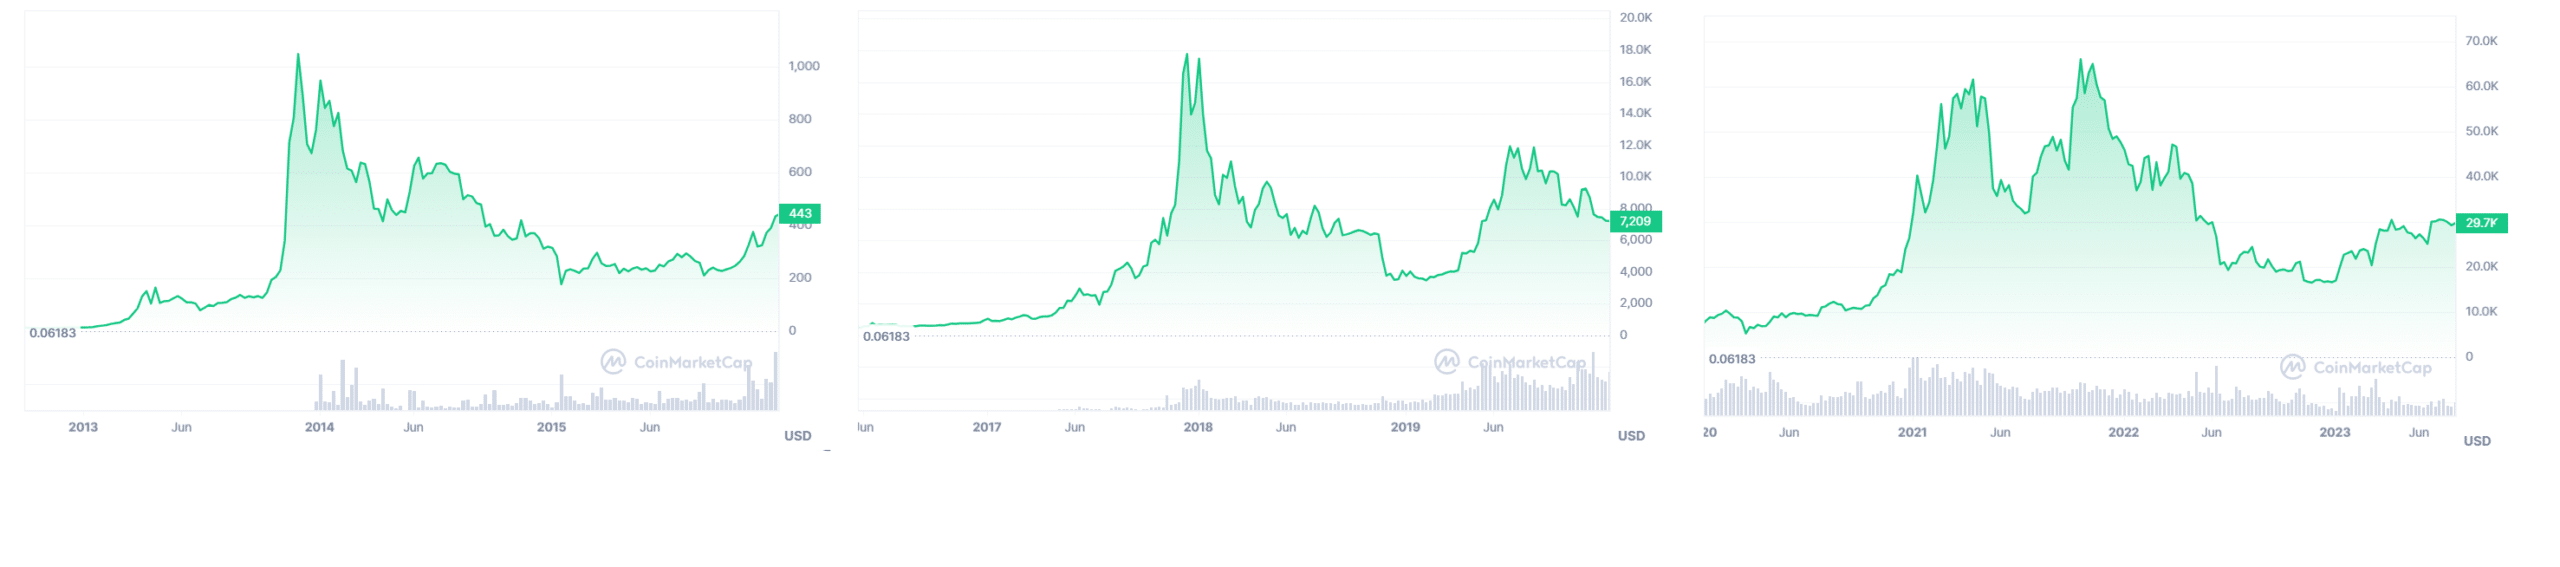 bitcoin halving historic price charts